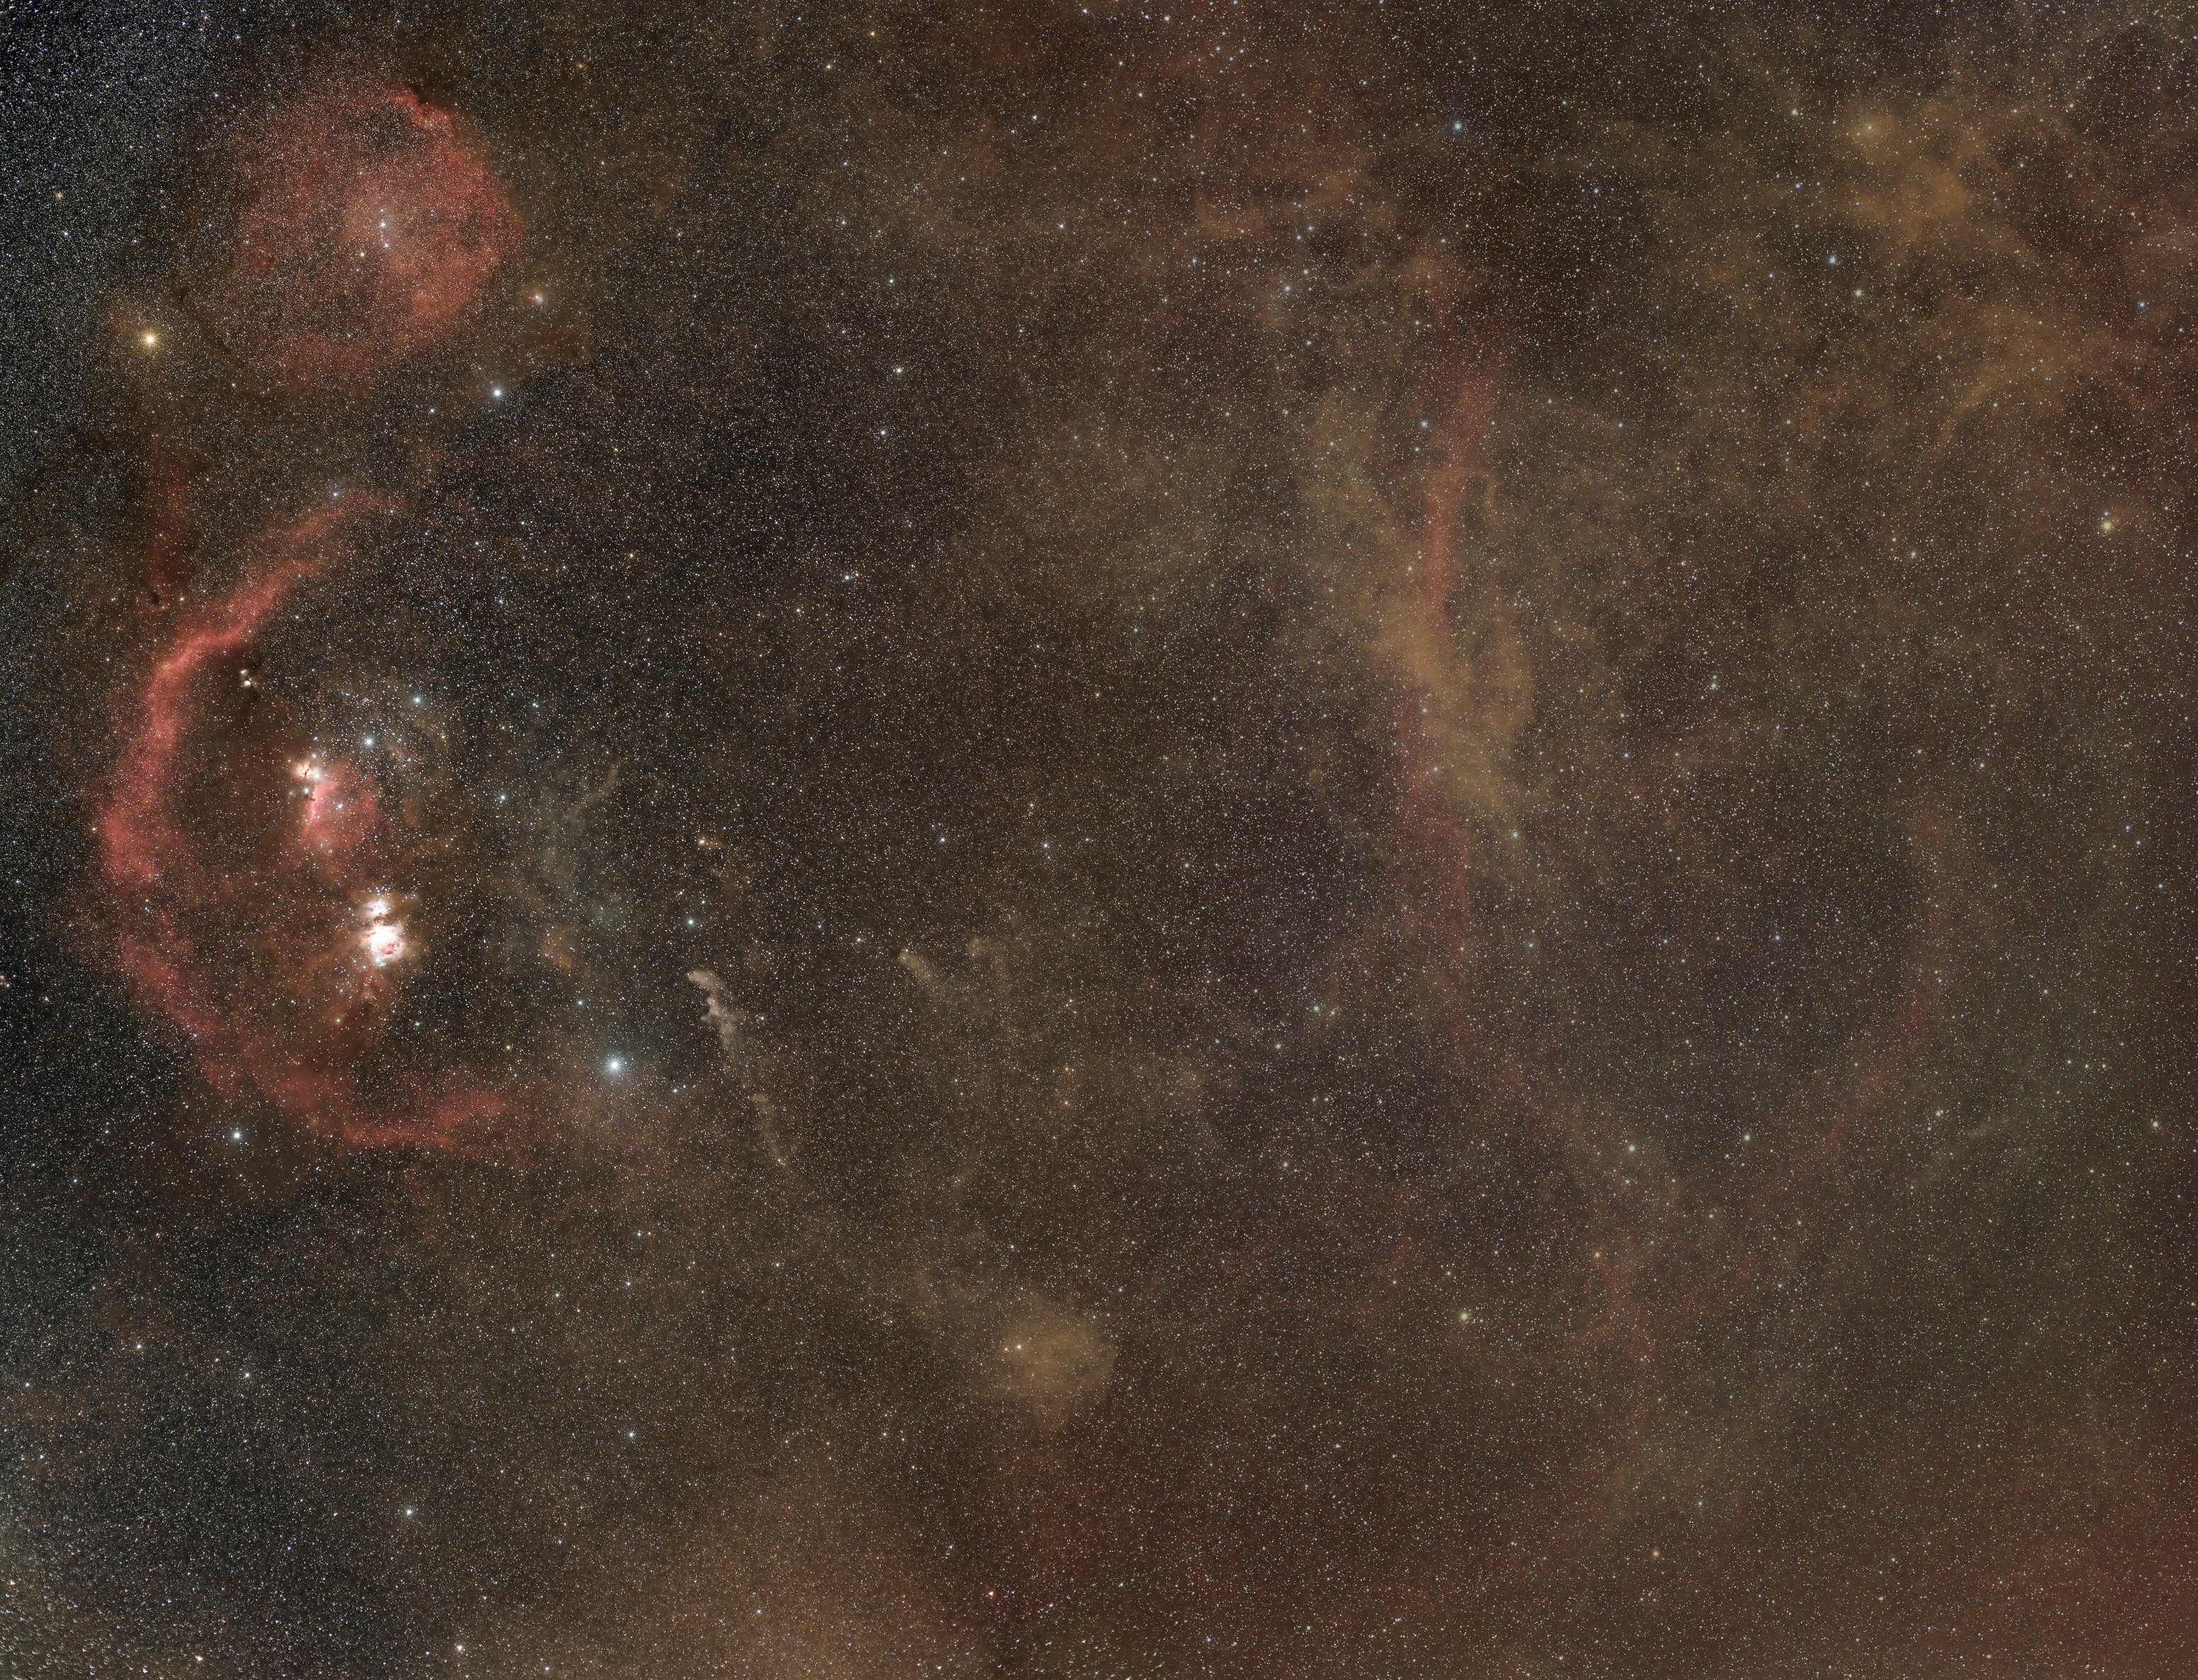 Re: Orion-Eridanus Super Bubble